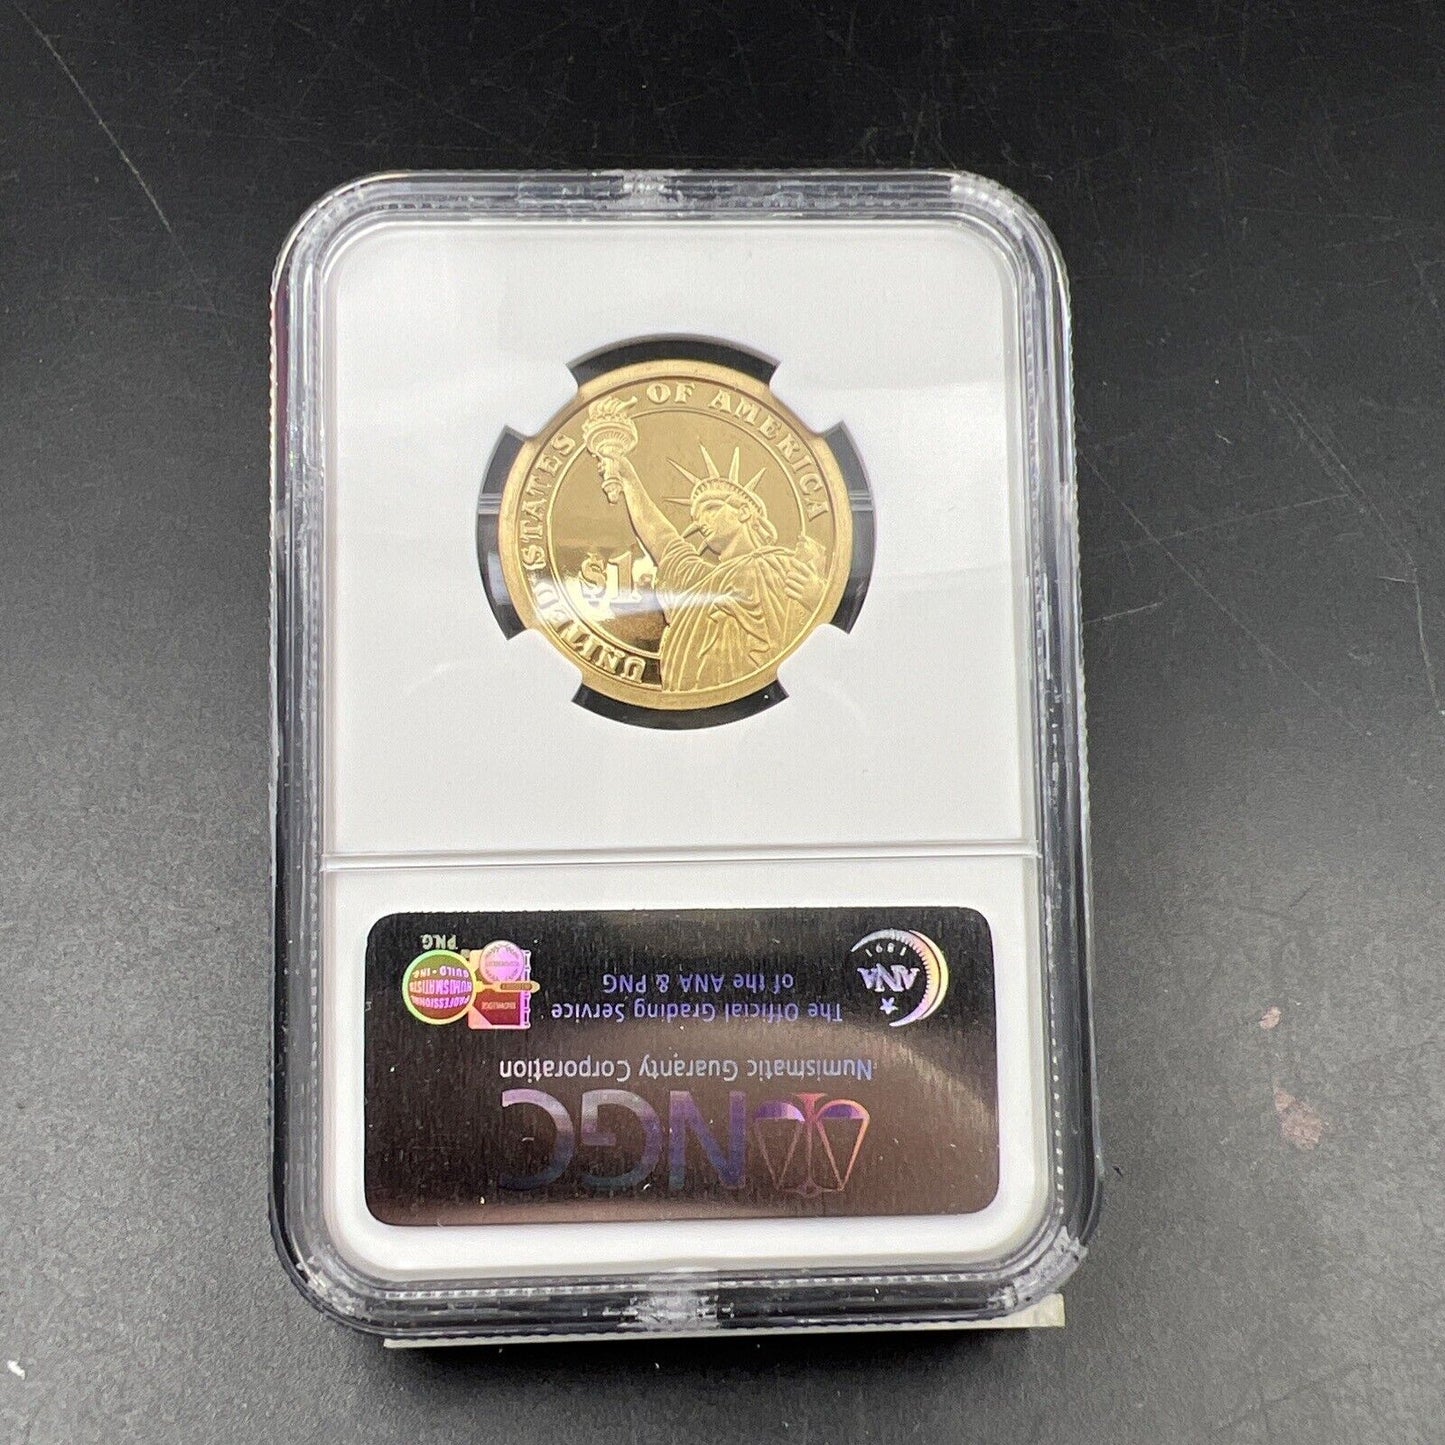 2007 S $1 Thomas Jefferson Presidential Dollar Coin NGC PF69 UCAM #069